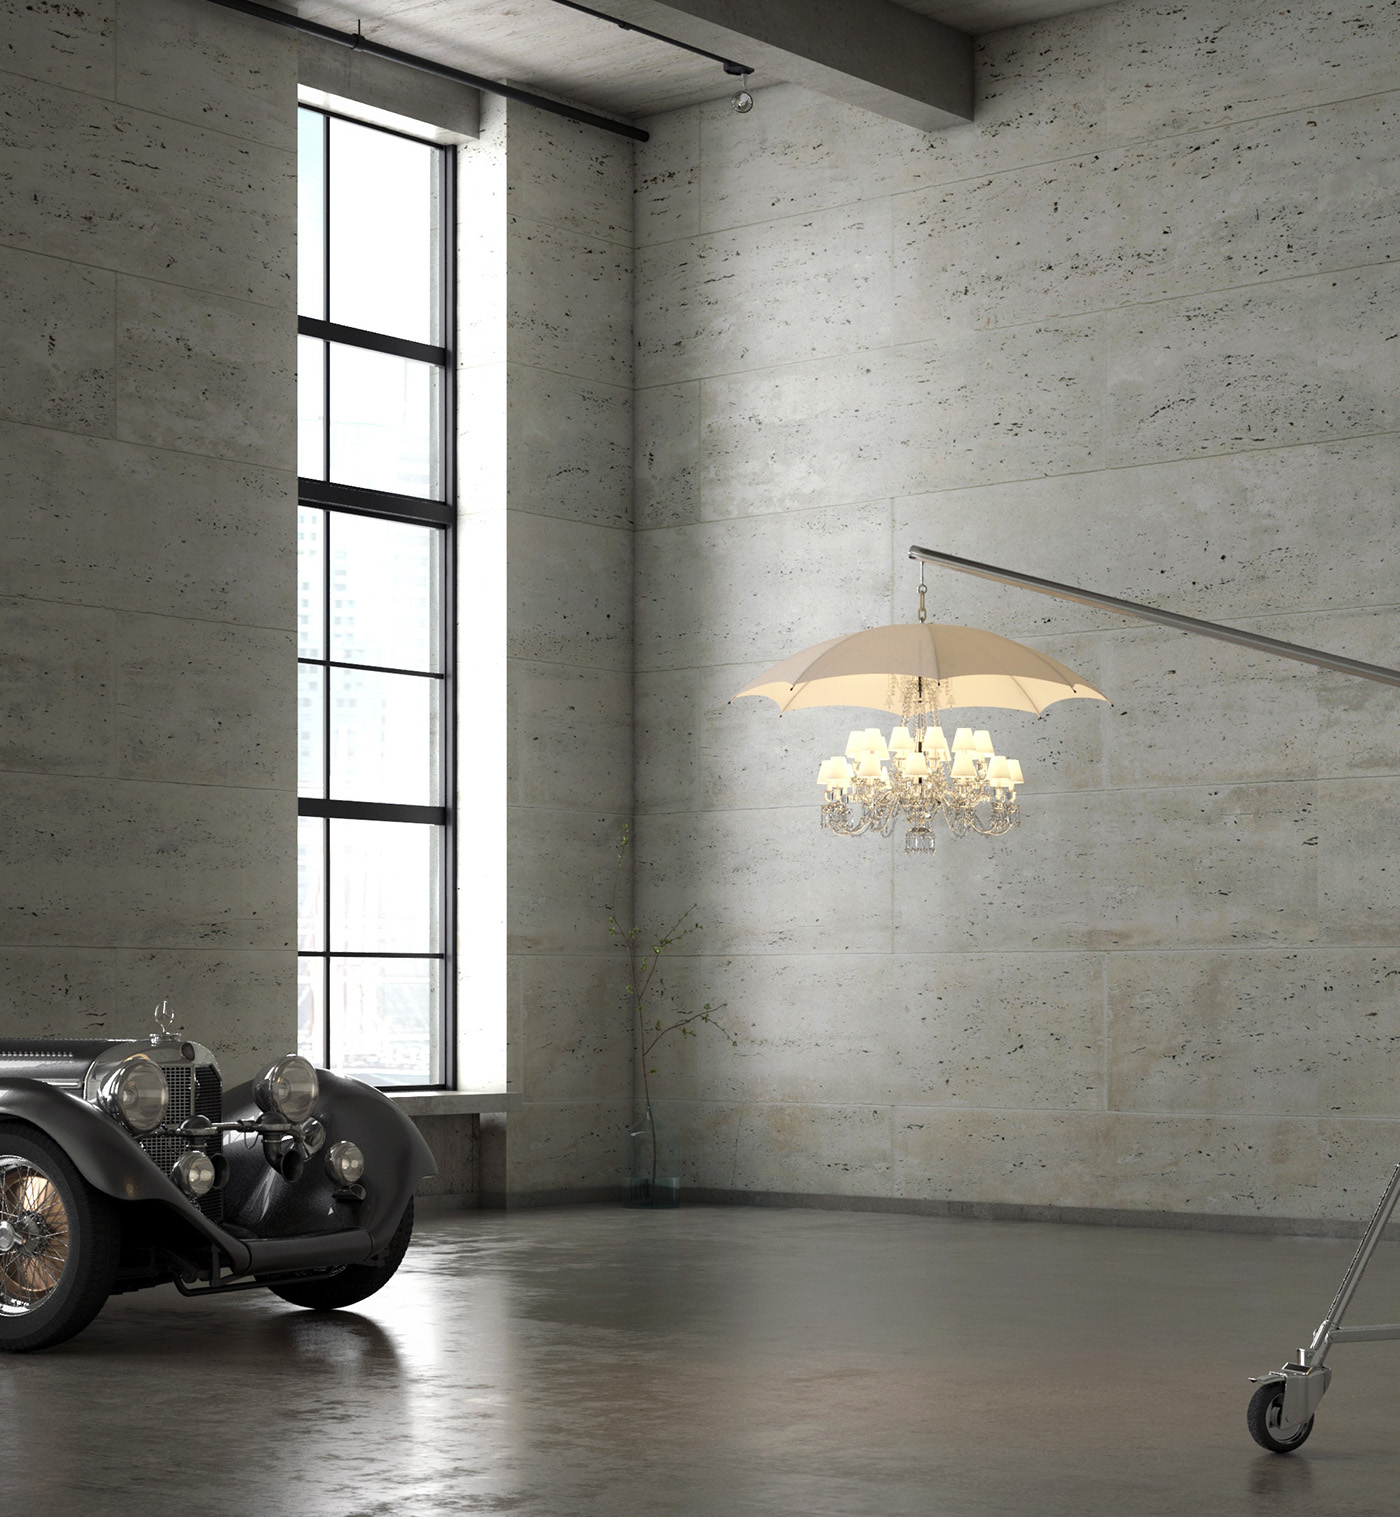 Philippe Starck Baccarat design Lamp story art Interior details